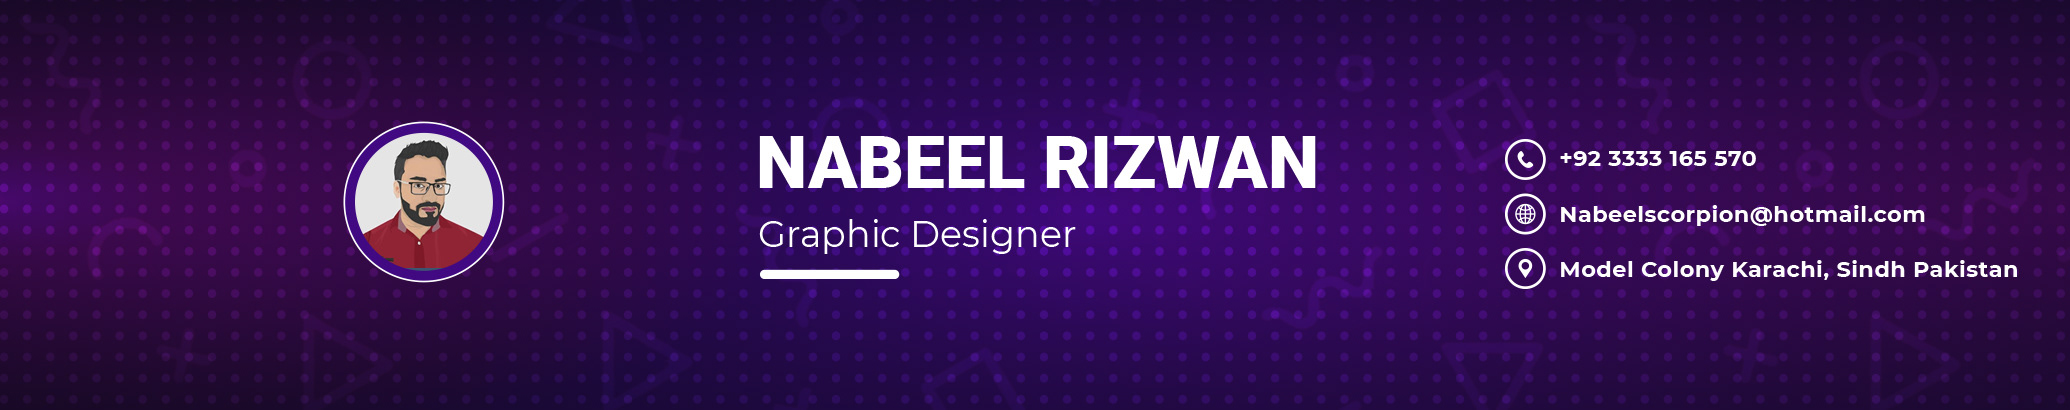 Nabeel Rizwan's profile banner